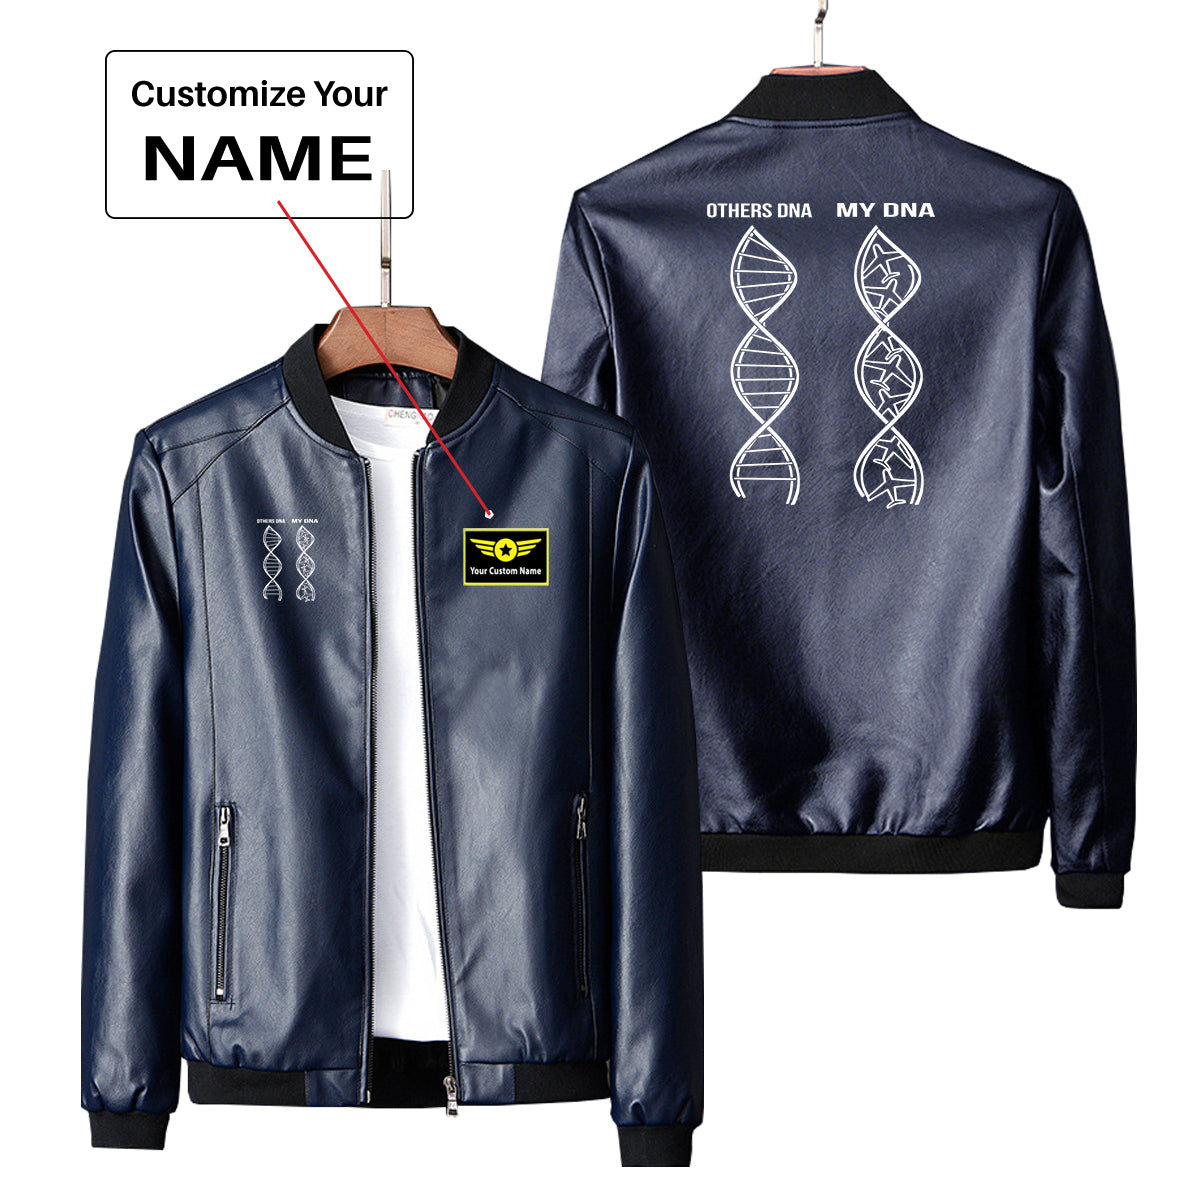 Aviation DNA Designed PU Leather Jackets